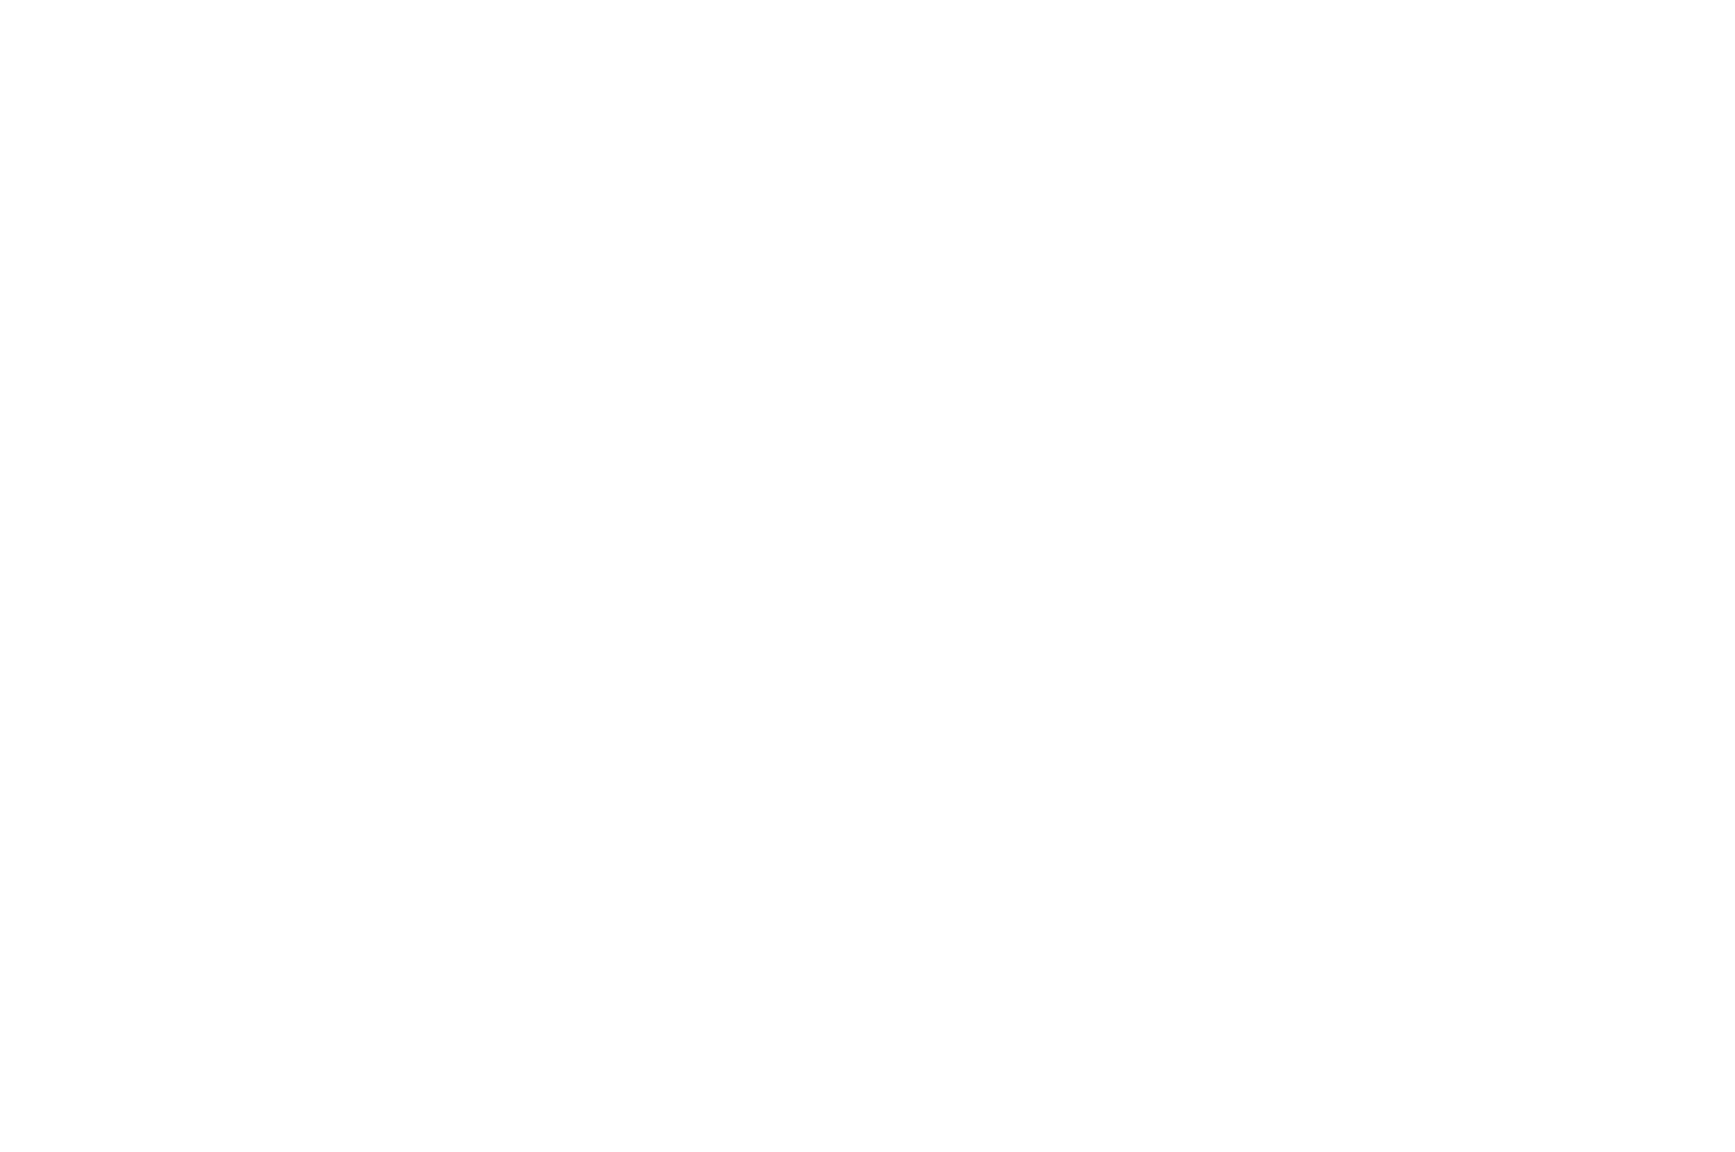 Official Selection HorrOrigins Film Fest 2022